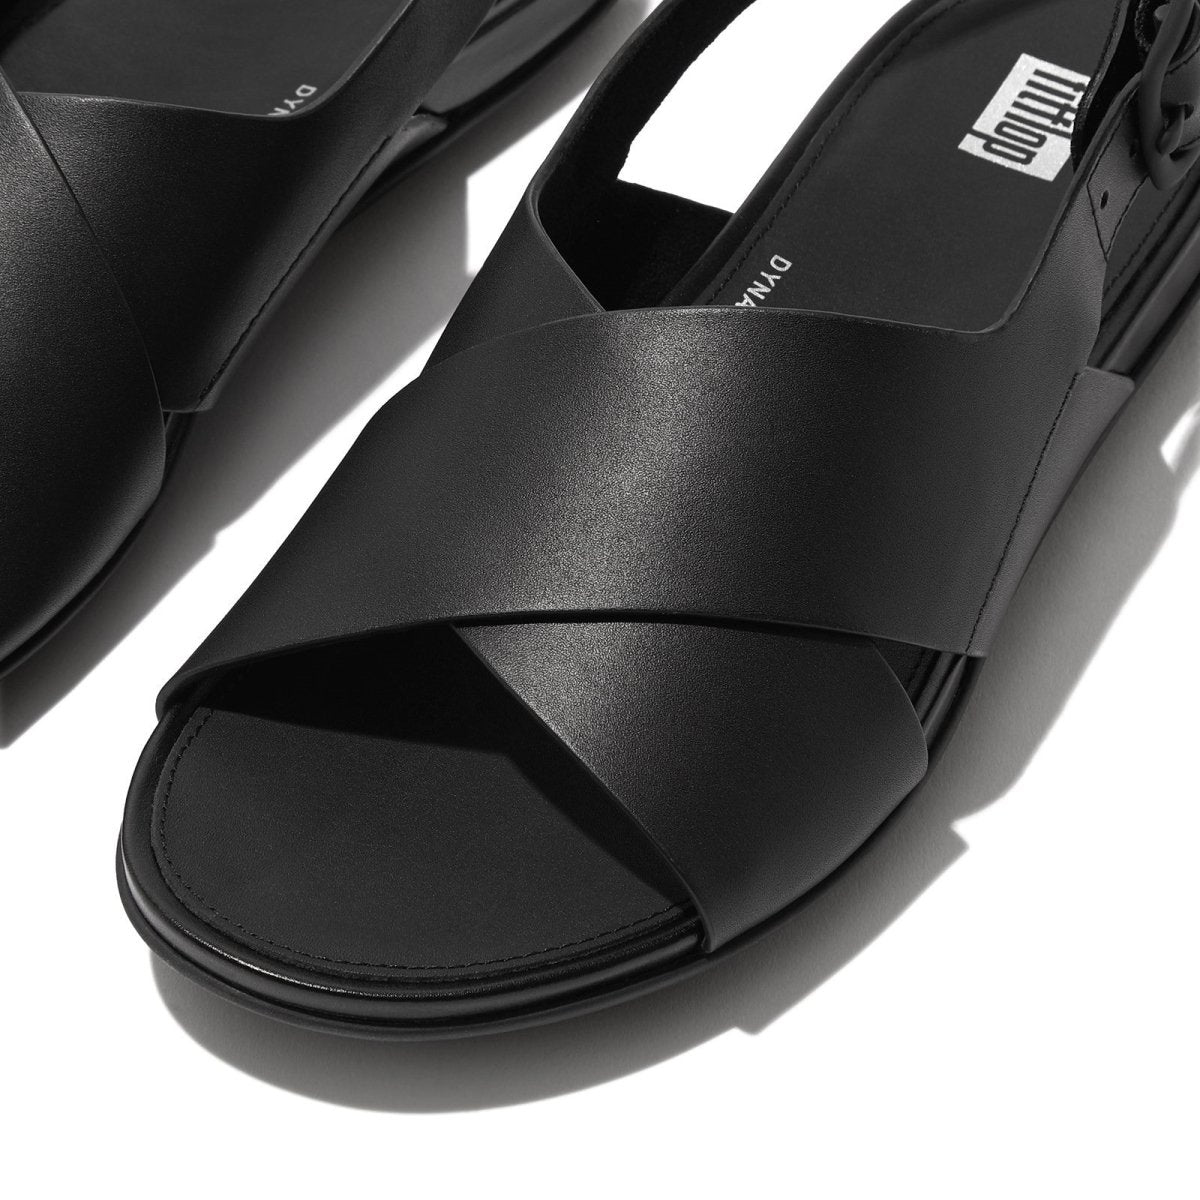 Fitflop Gracie Ladies Slip-Resistant Summer Adjustable Sandals - Shoe Store Direct